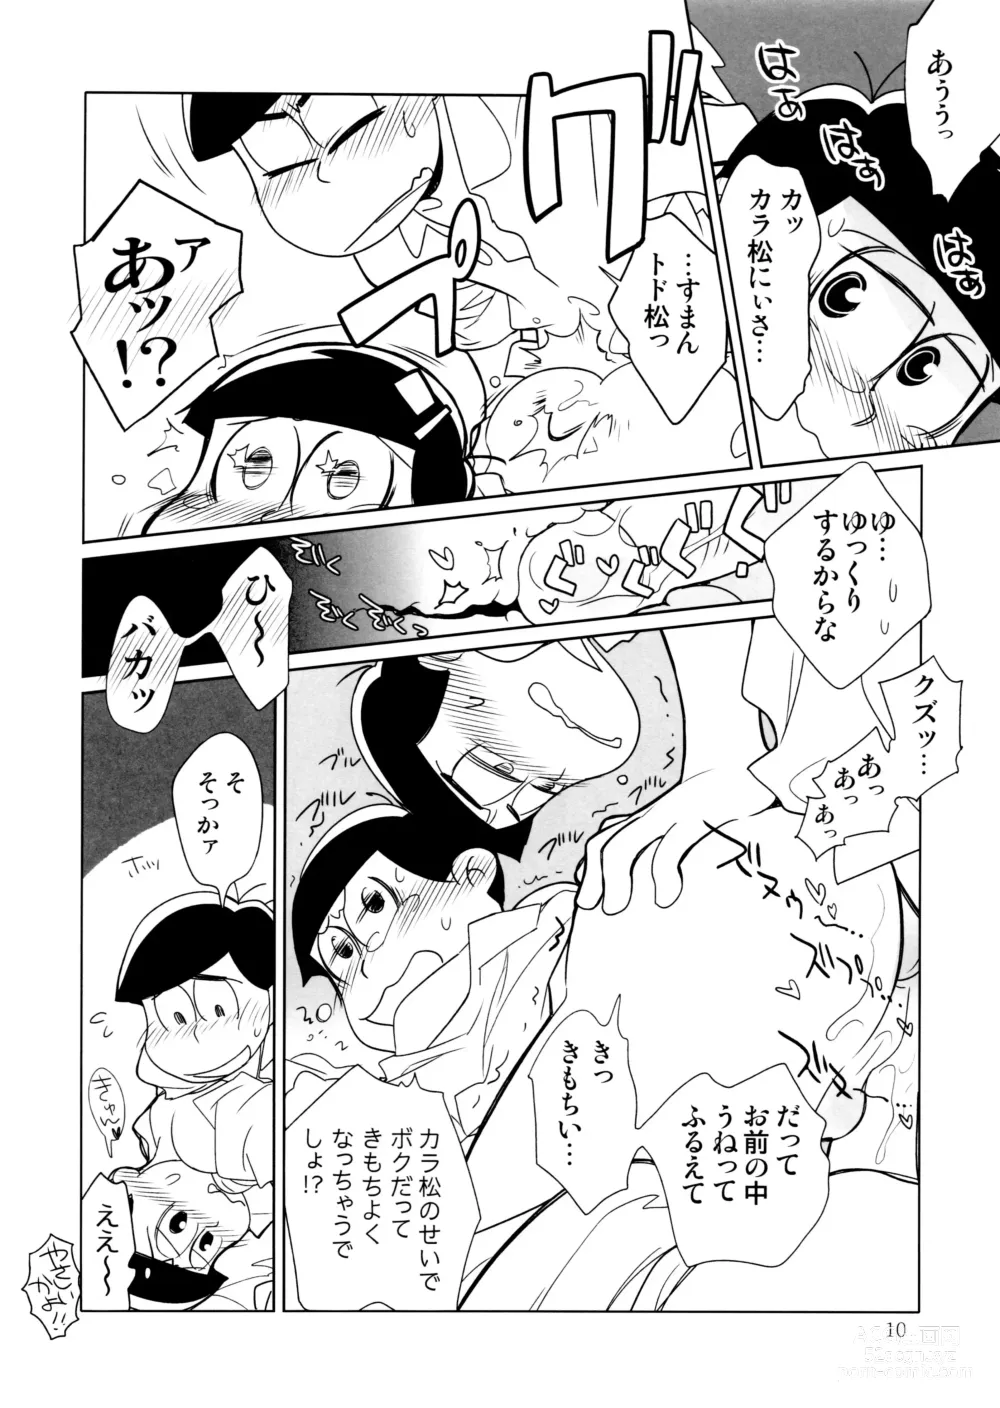 Page 10 of doujinshi Nyankarapyon